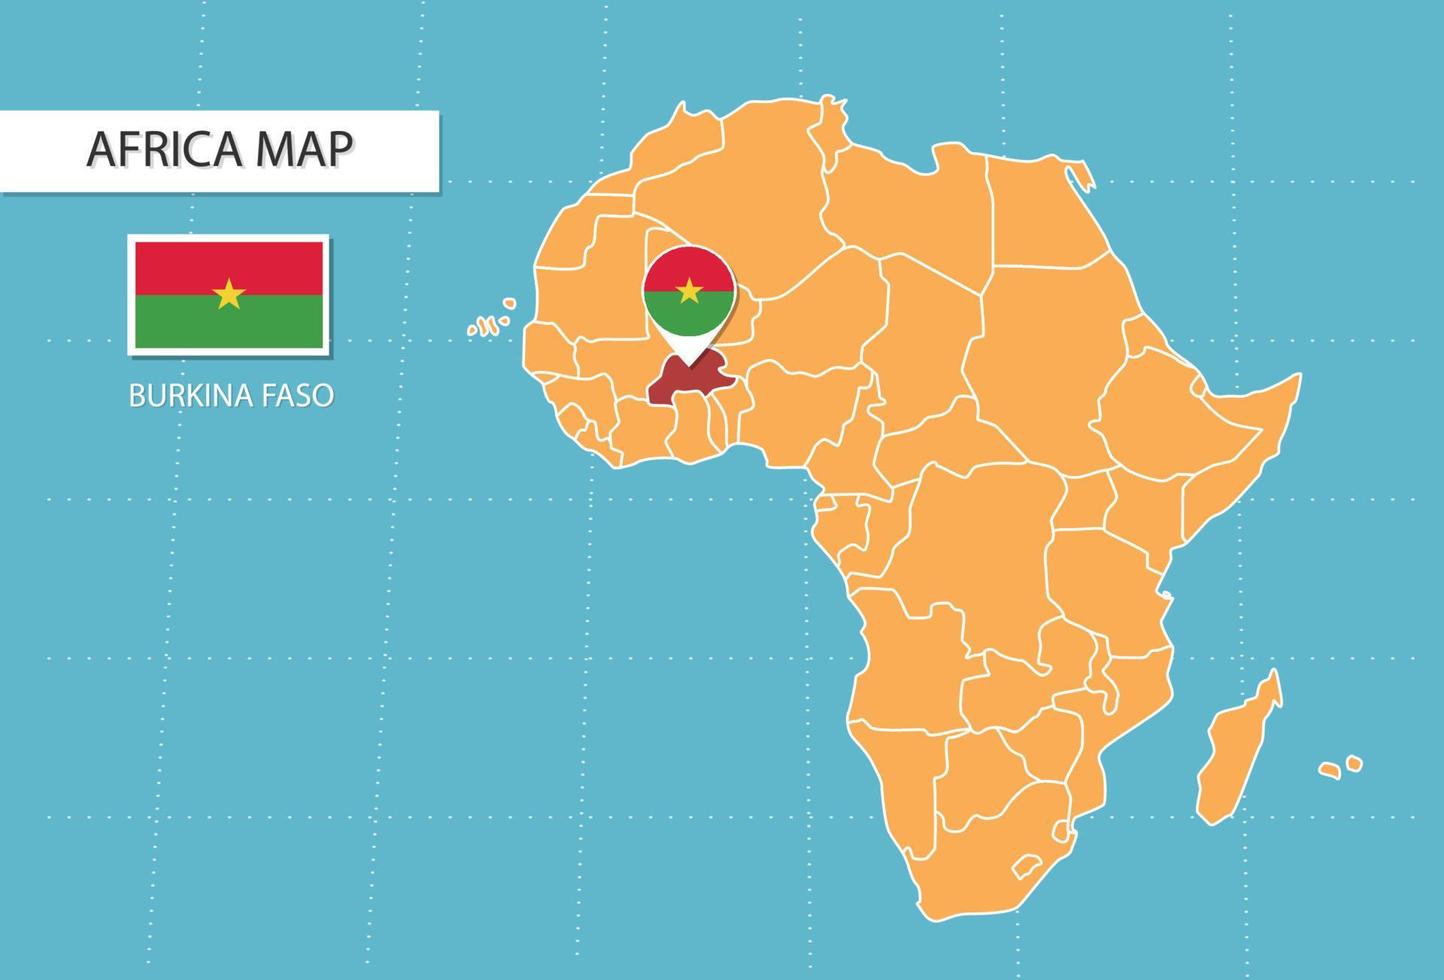 burkina faso karte in afrika, symbole zeigen burkina faso lage und flaggen. vektor